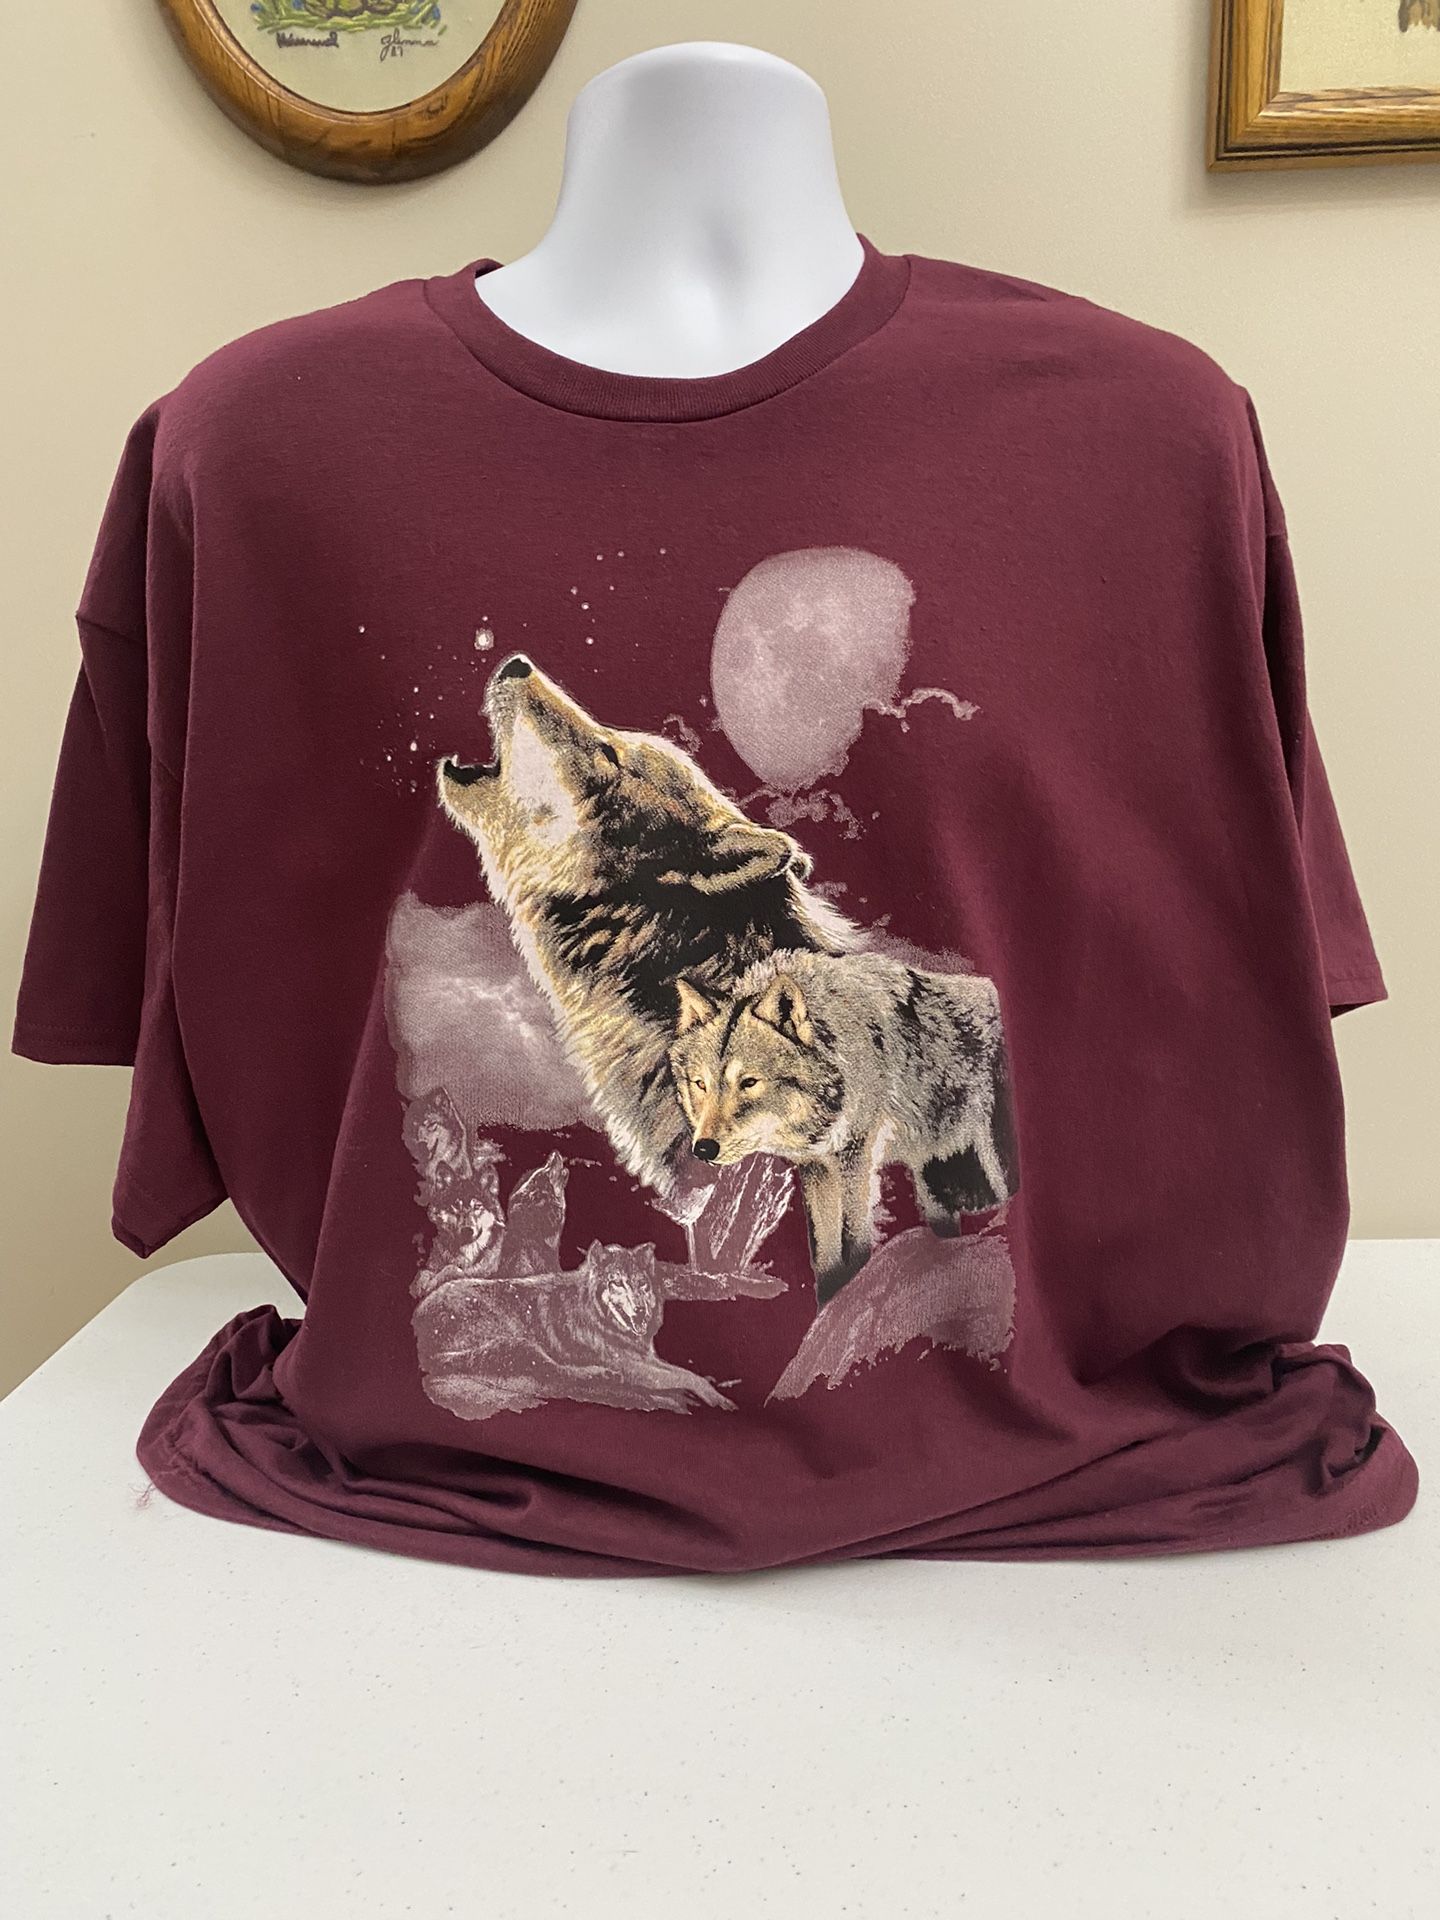 Design T-shirt, New, Gildan 50/50 Cotton/Poly, Size 2X